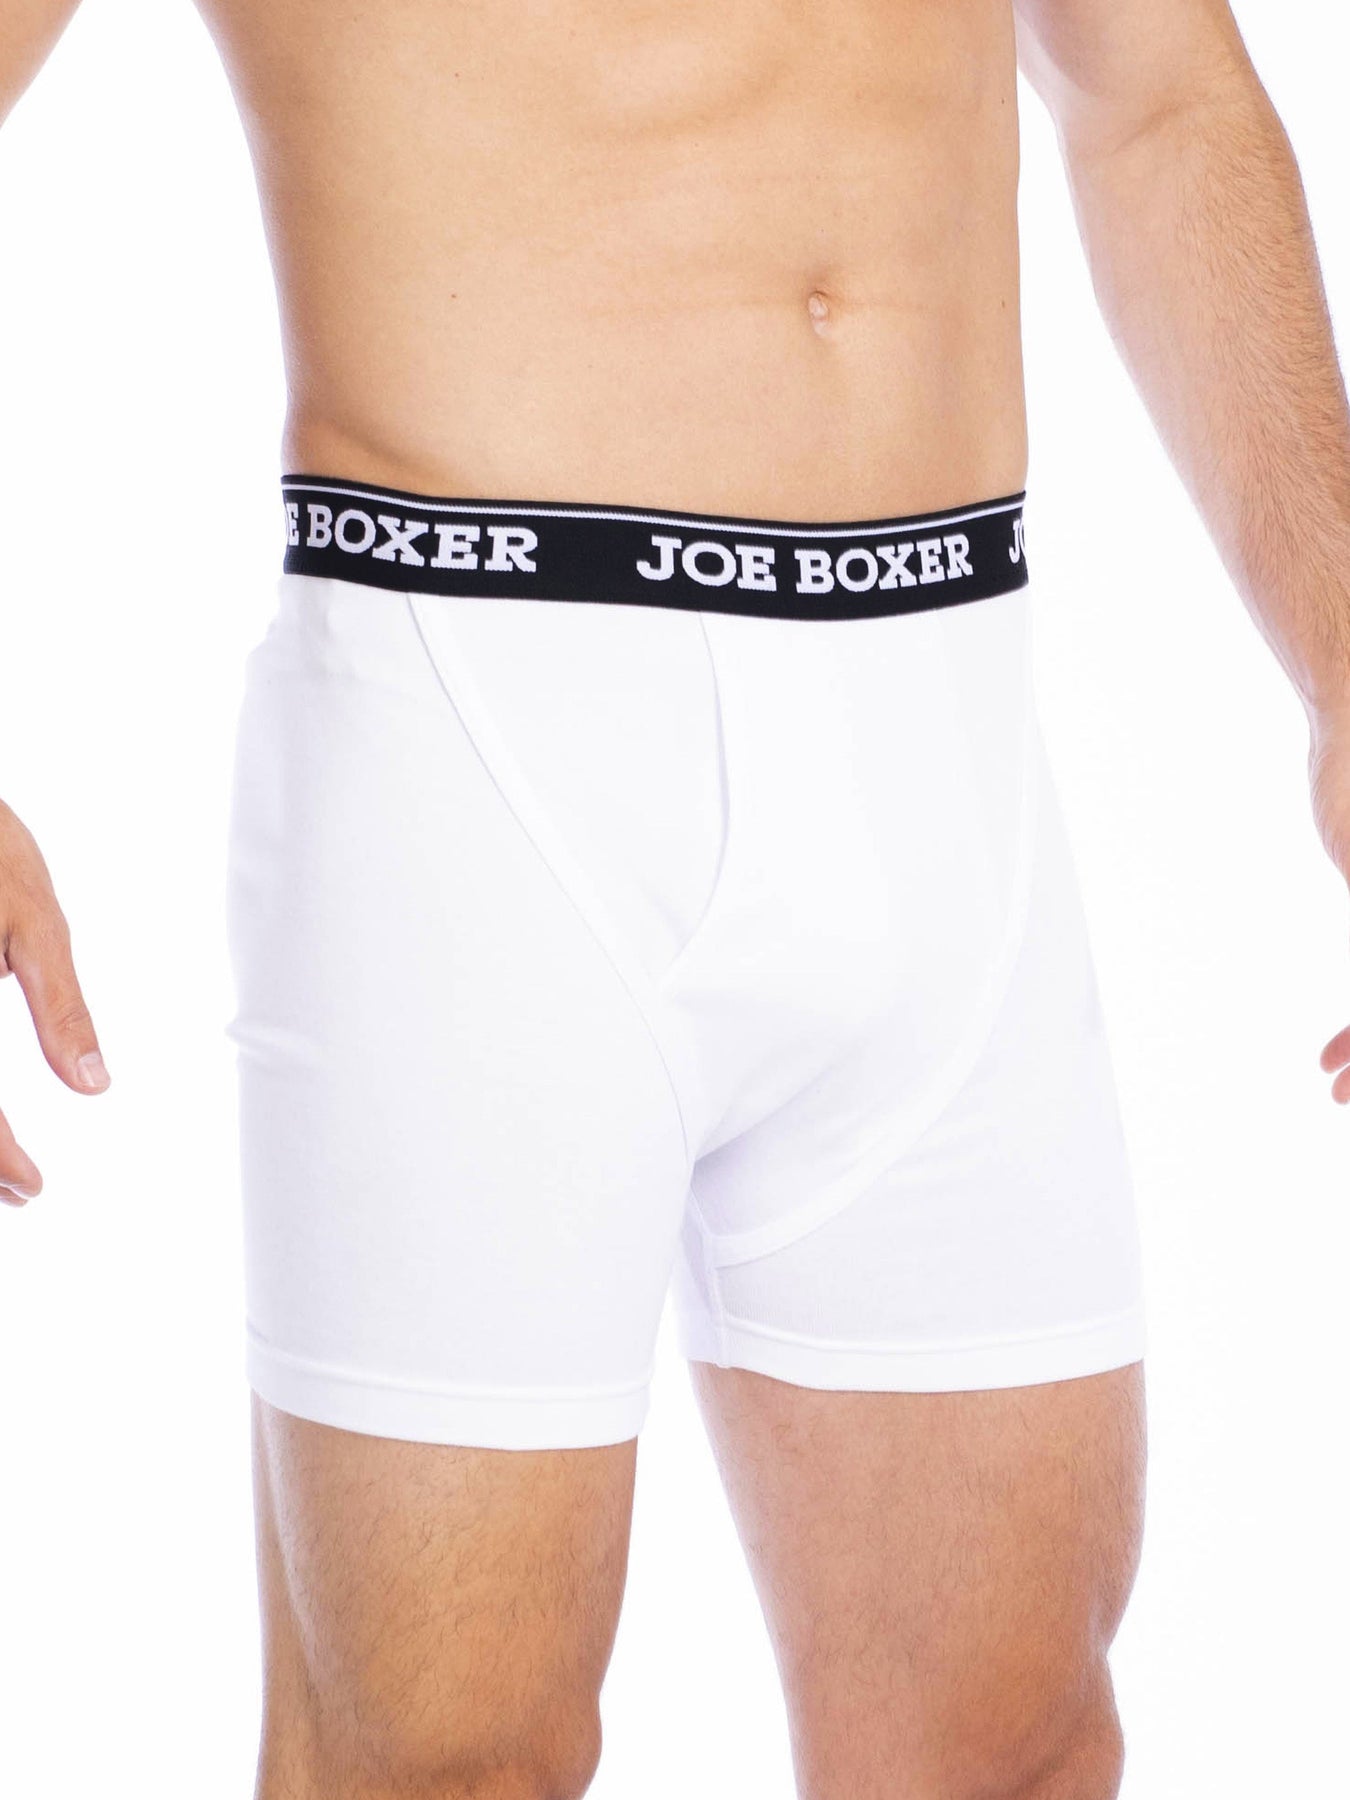 3-12 PACK Men's White Boxer Shorts W/ Comfortable Flex Waistband